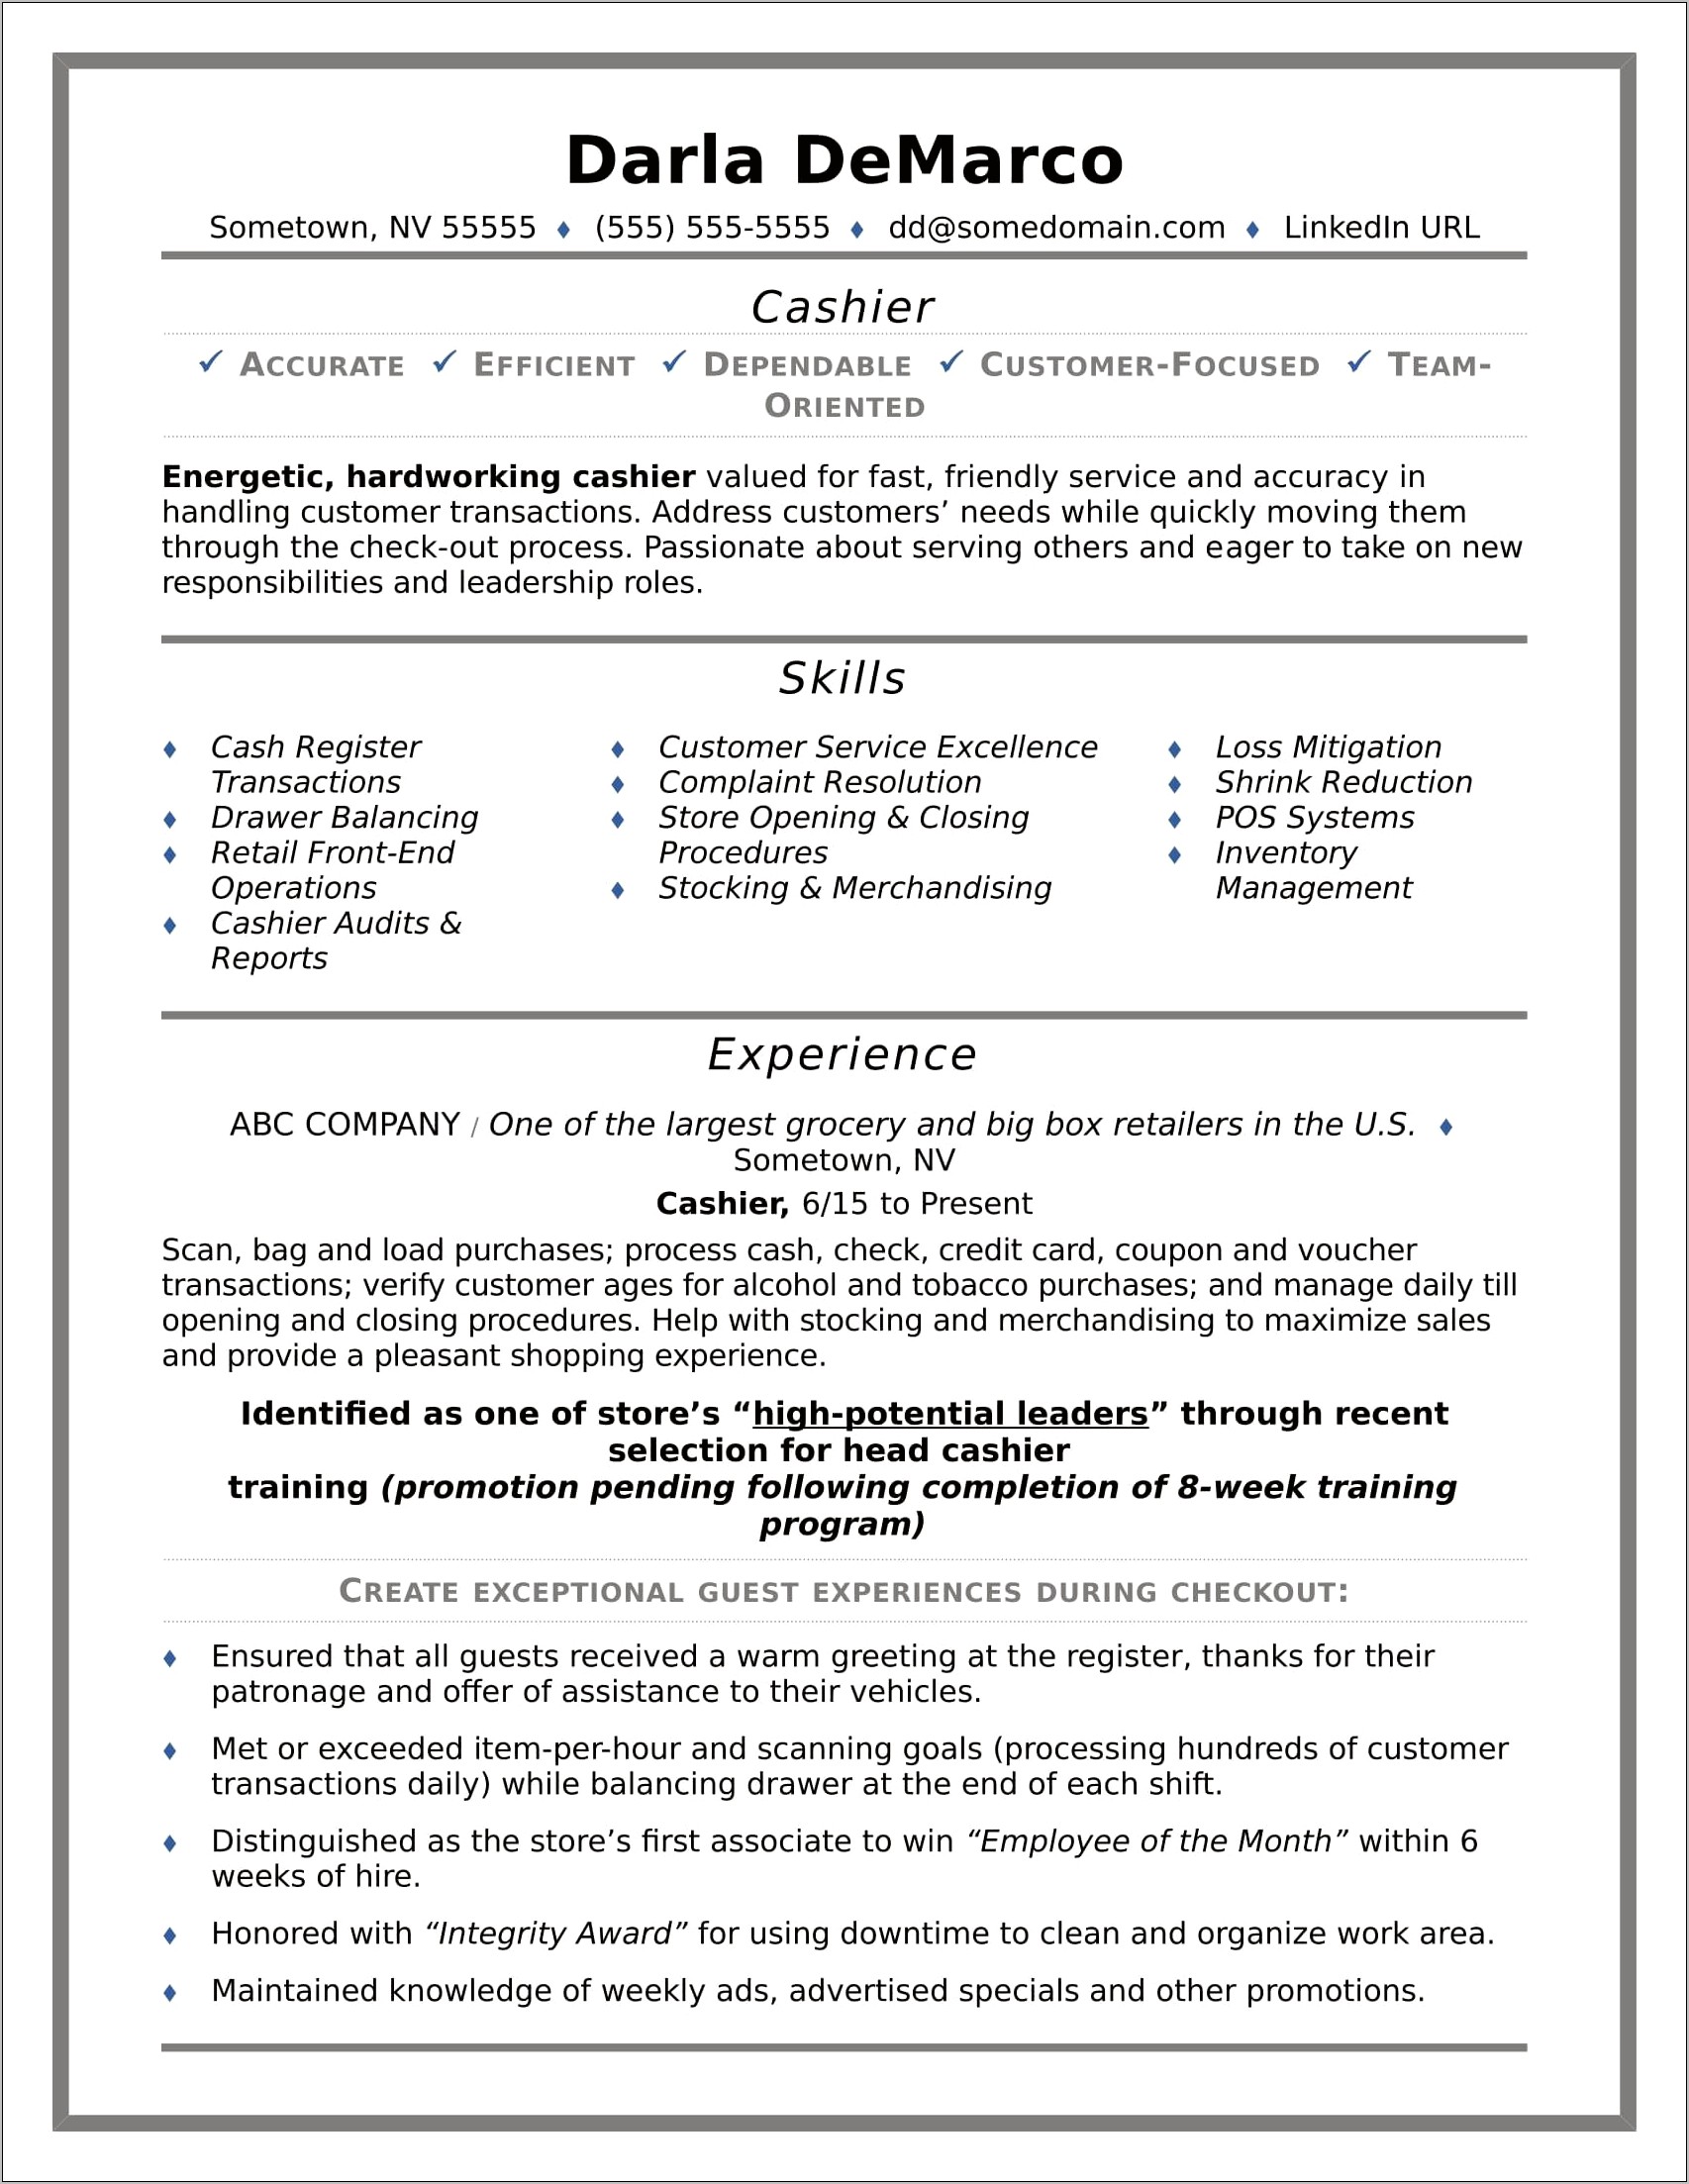 Sample Functional Resume For Cashier